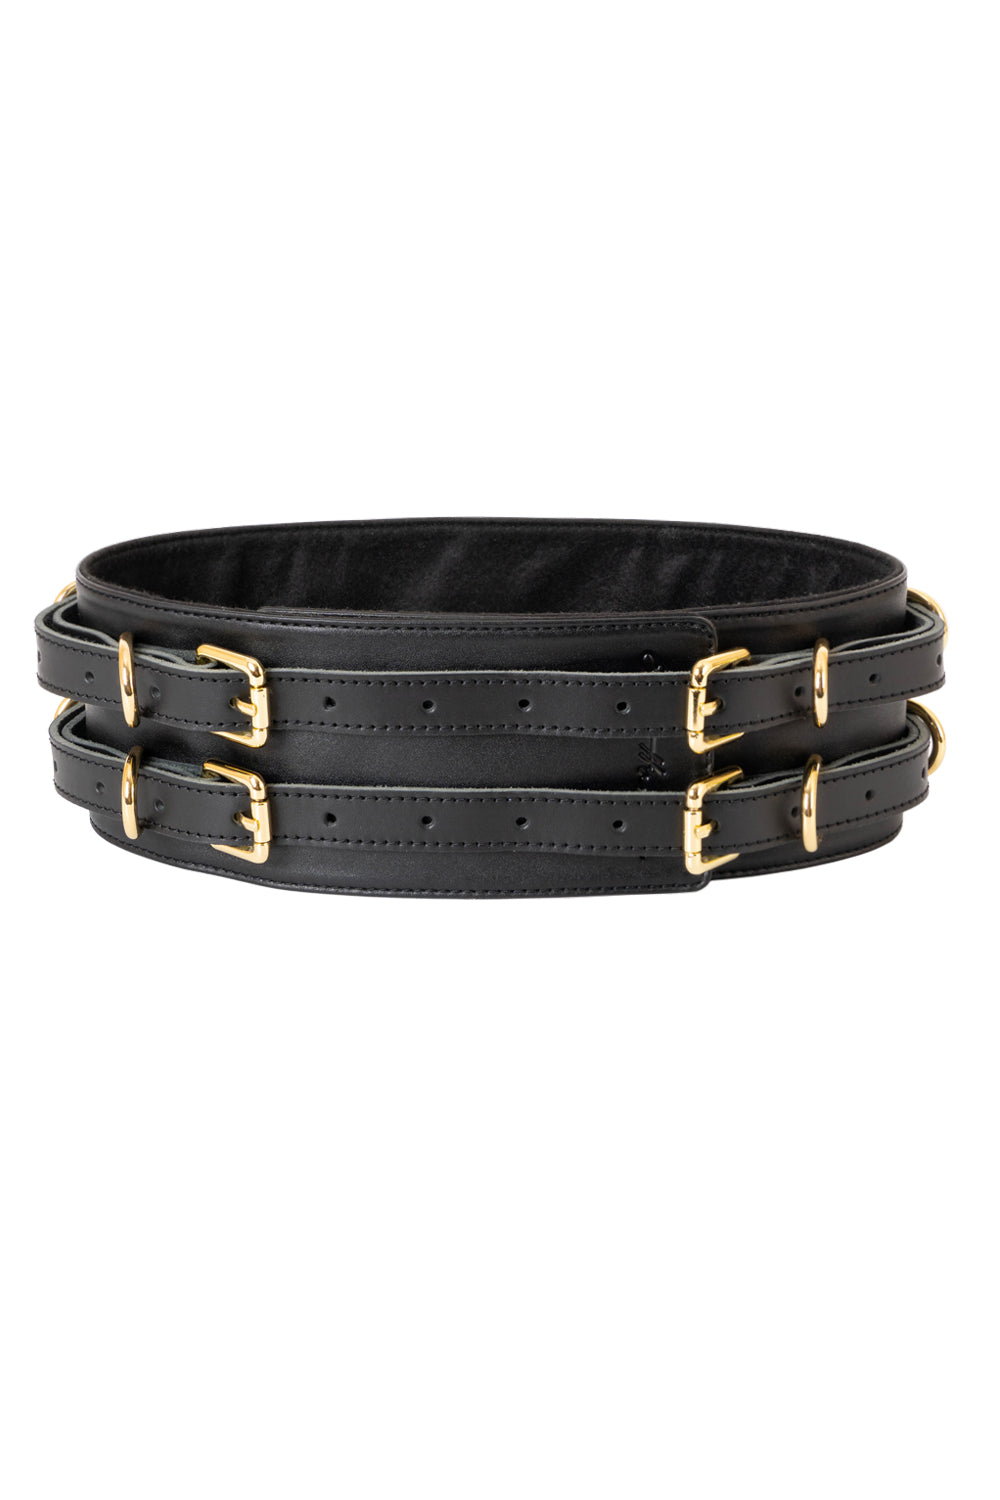 Leather Waist Belt. Black